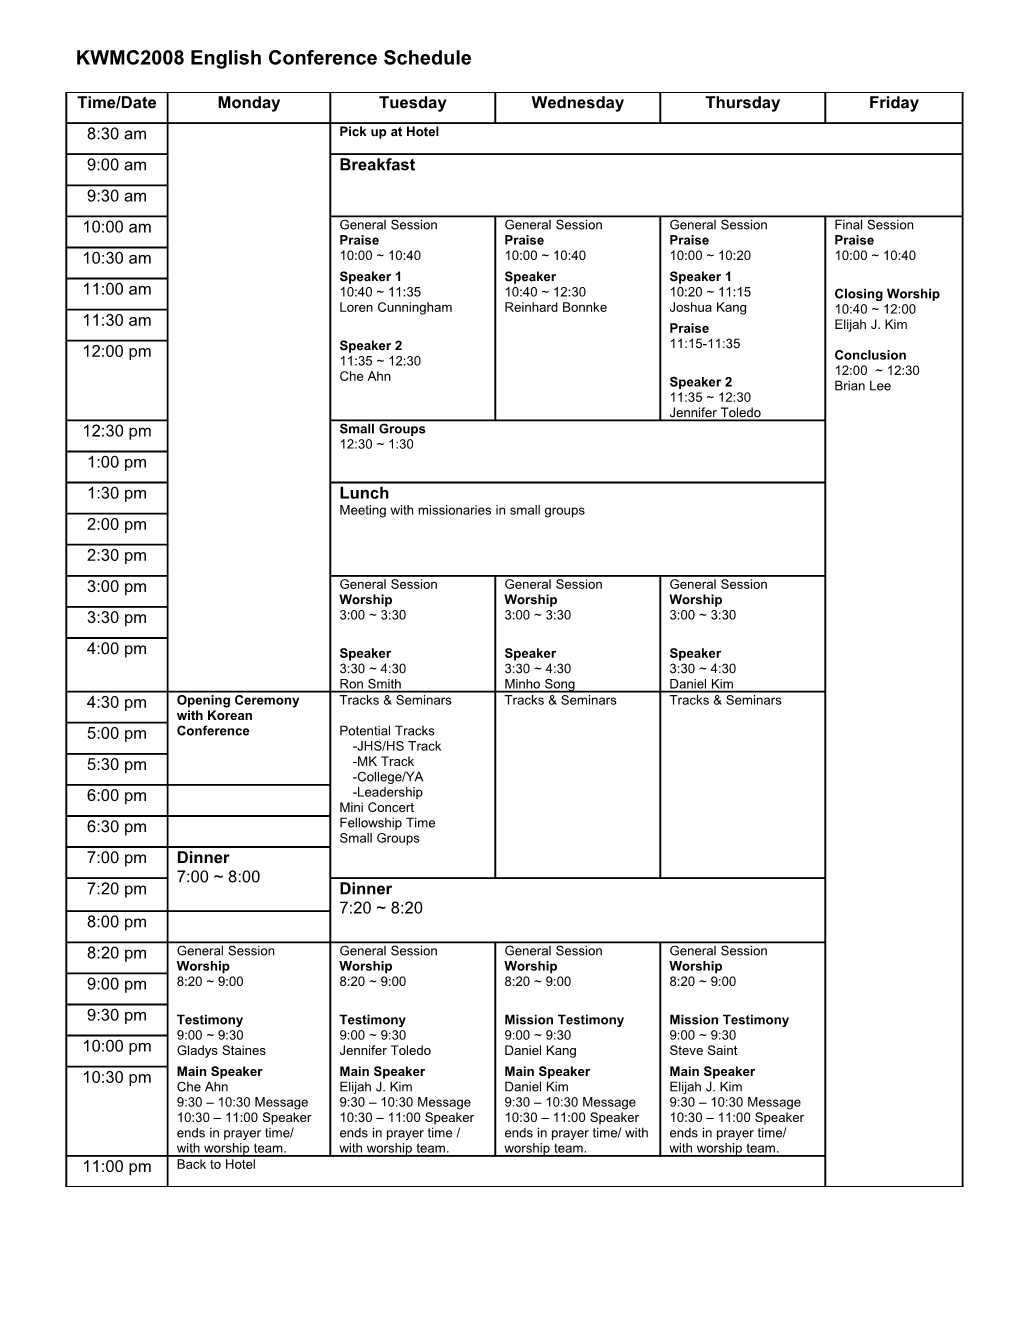 Tetative Schedule As of 3/21/08